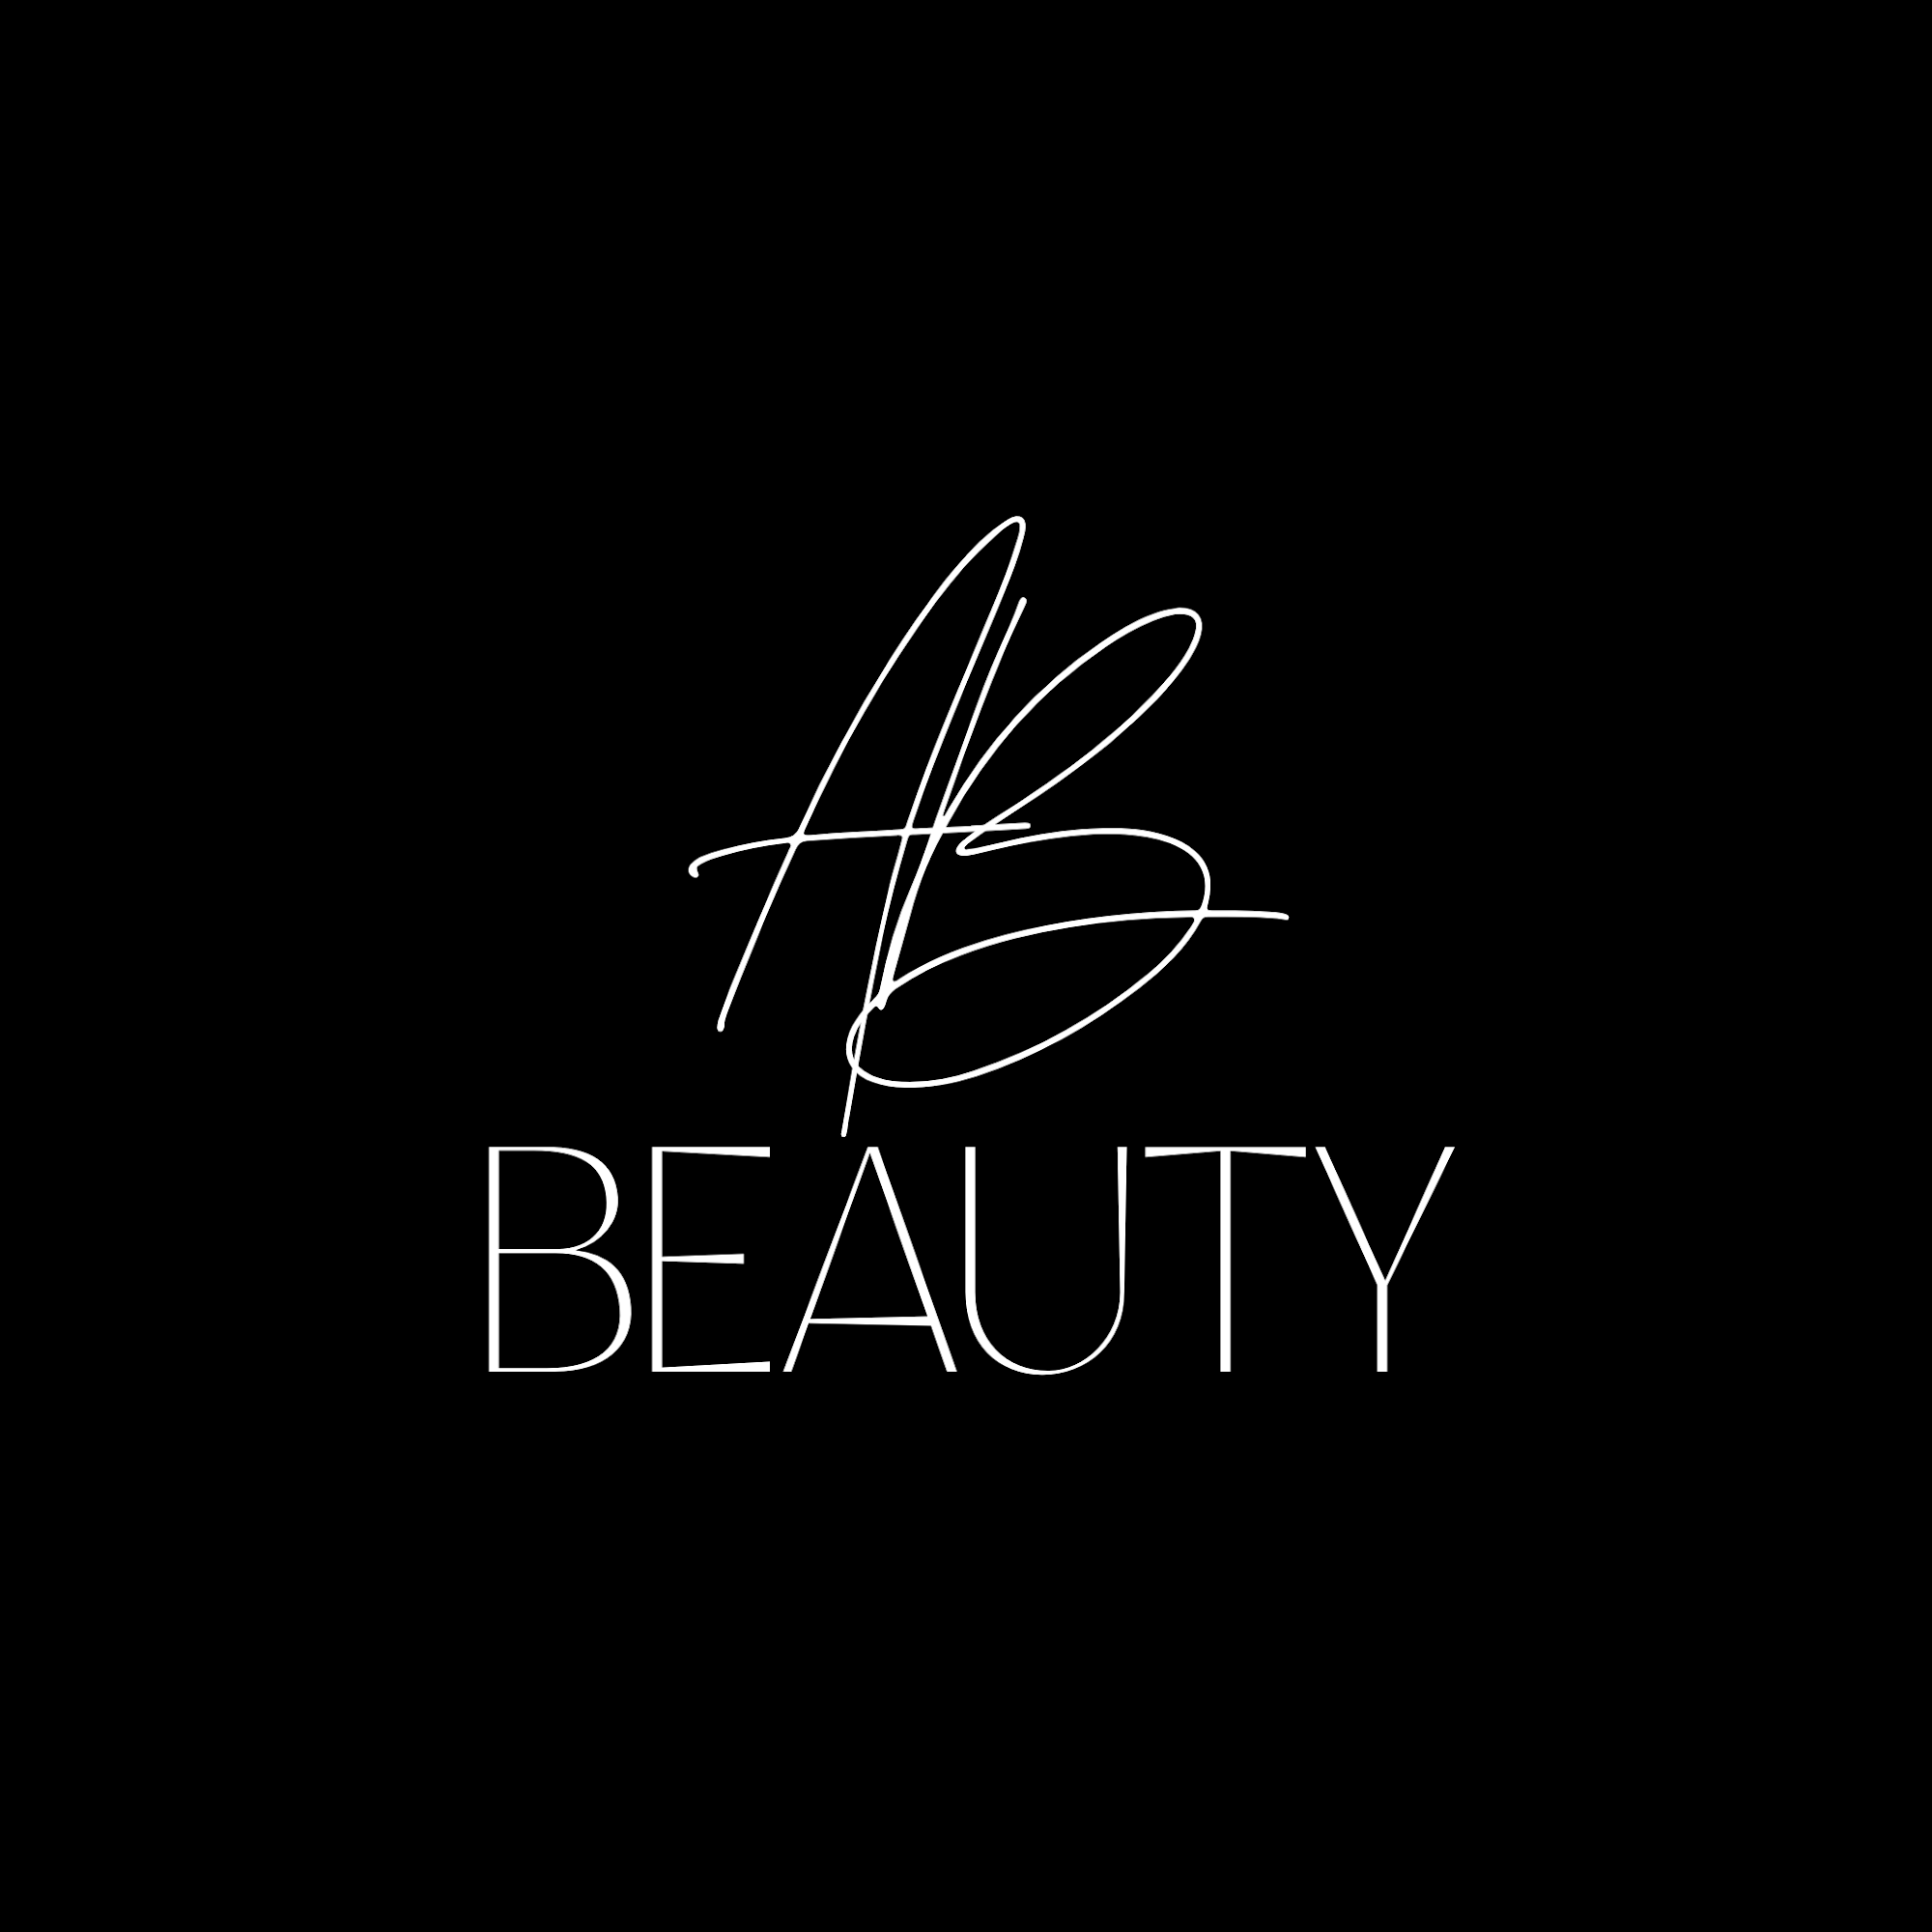 AB Beauty LLC 3790 Hedgesville Rd Suite P, Hedgesville West Virginia 25427